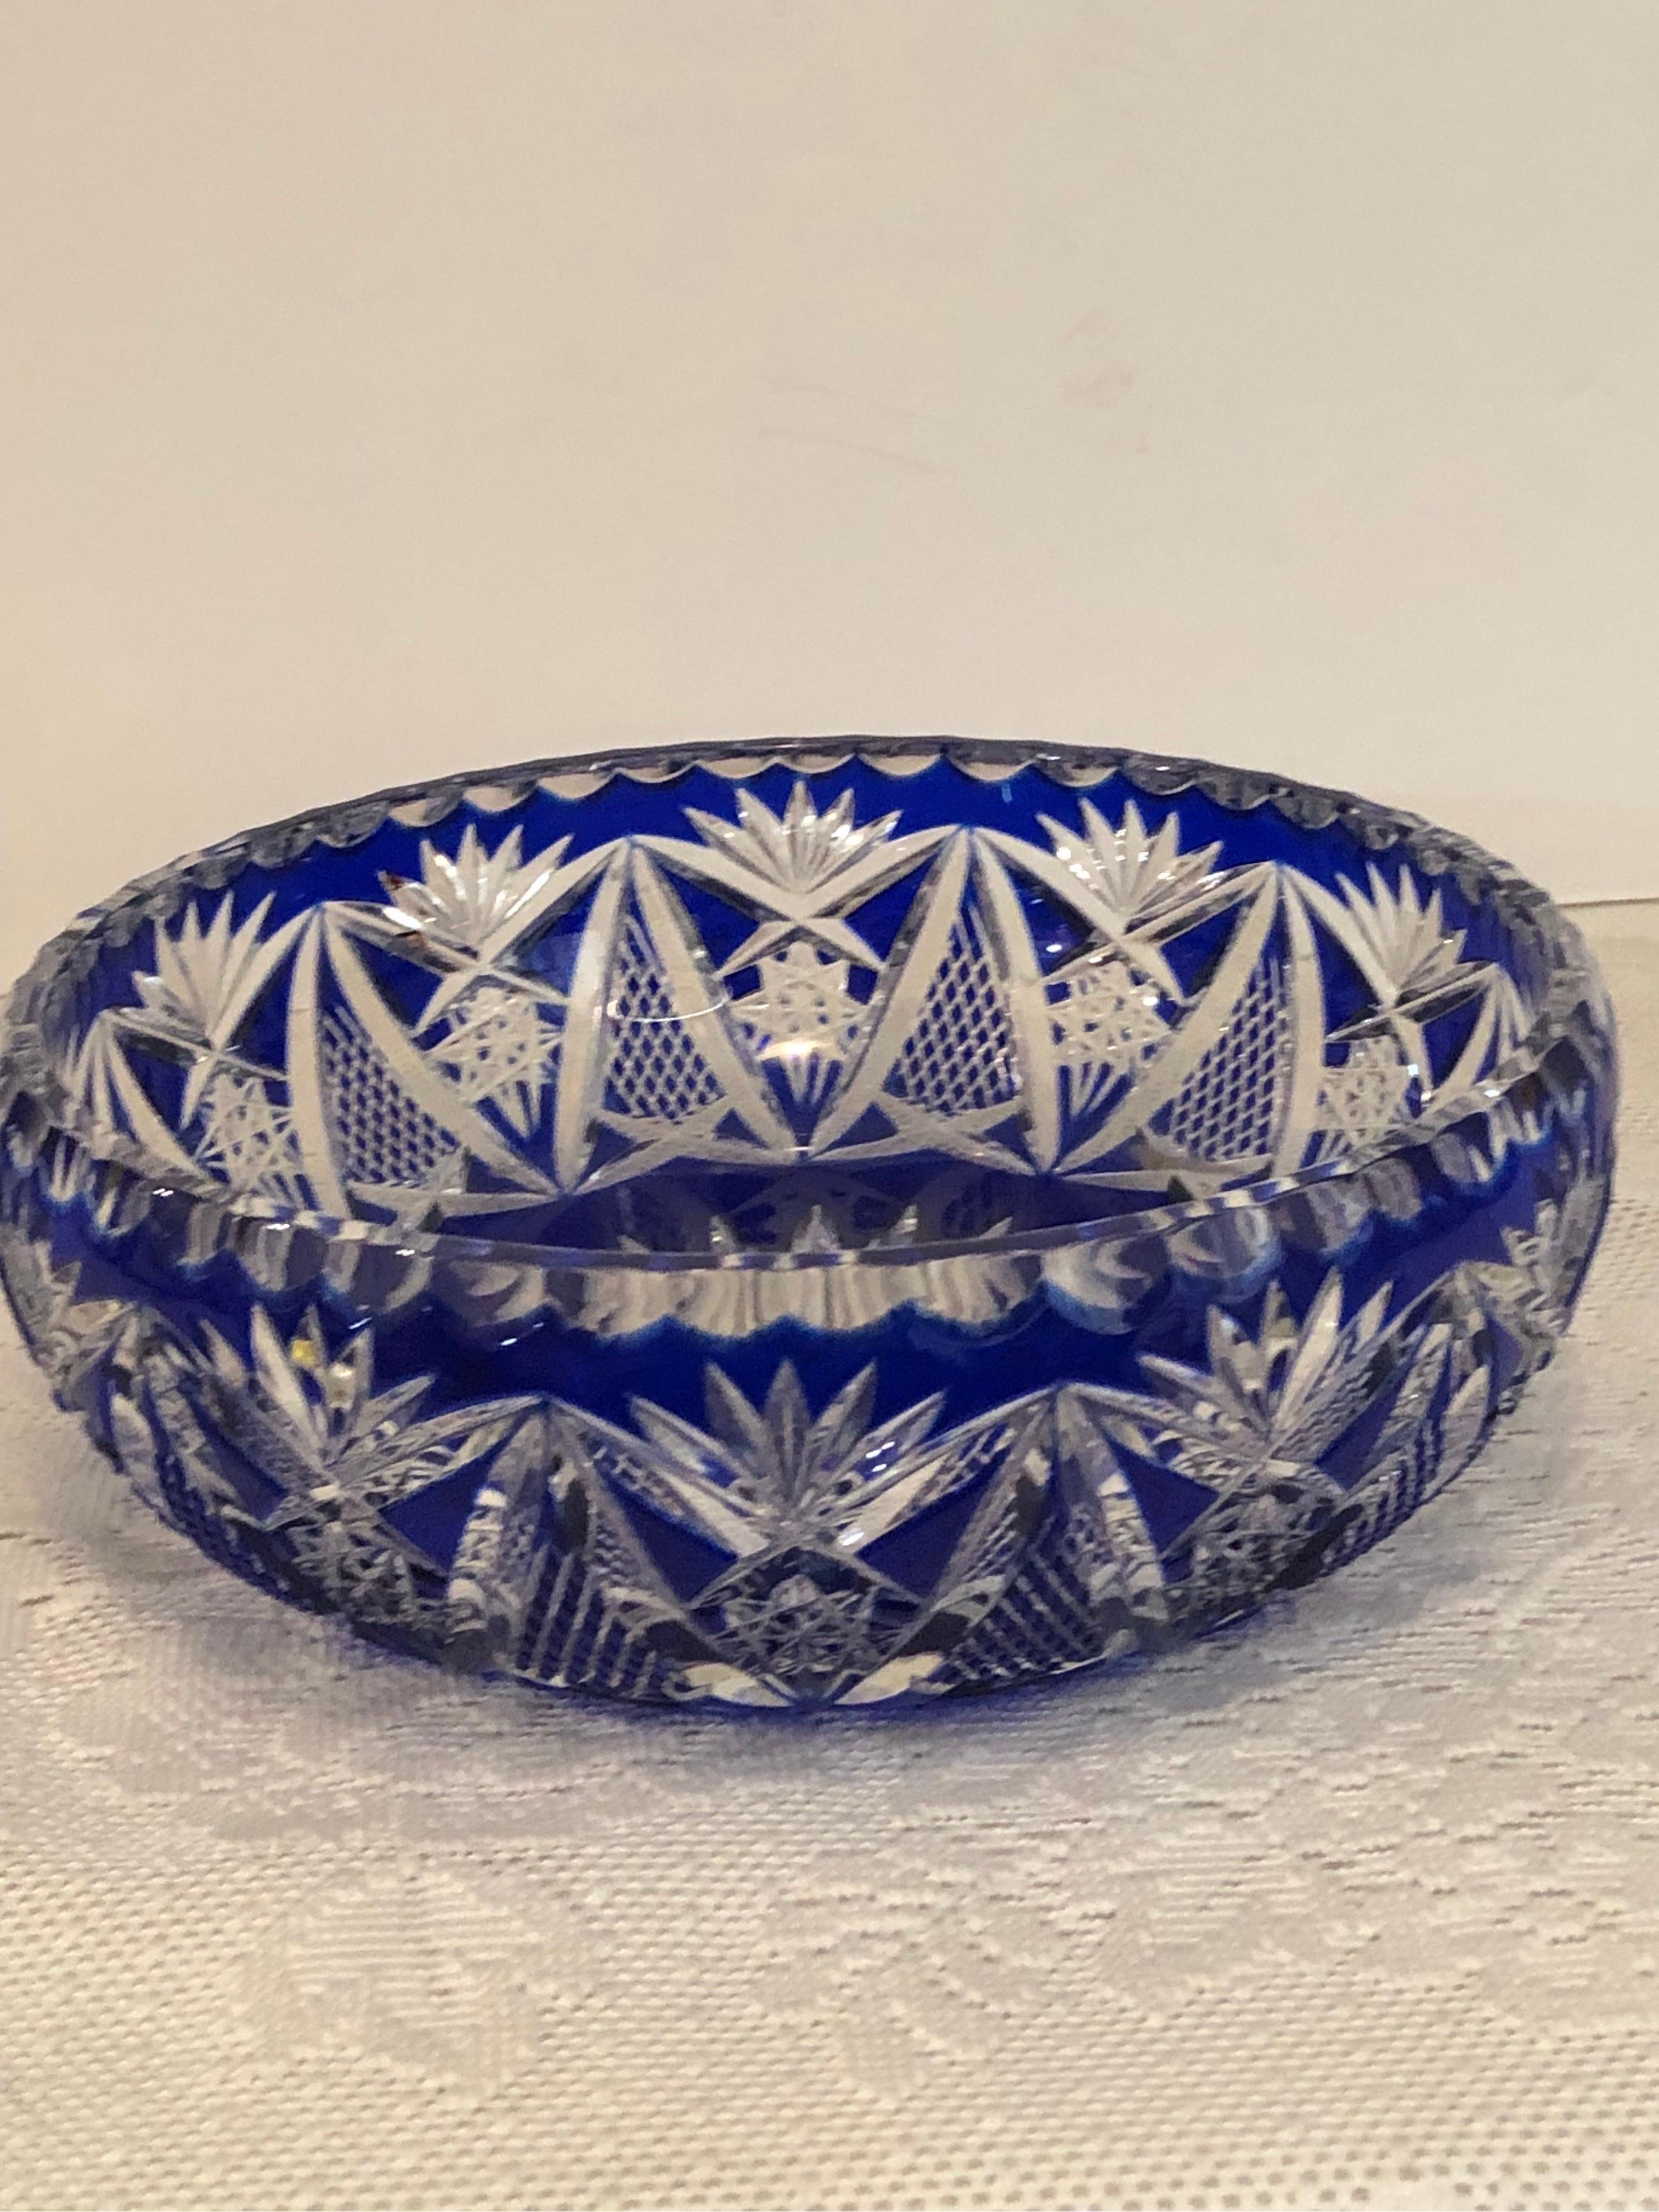 bohemia crystal bowl made in czechoslovakia